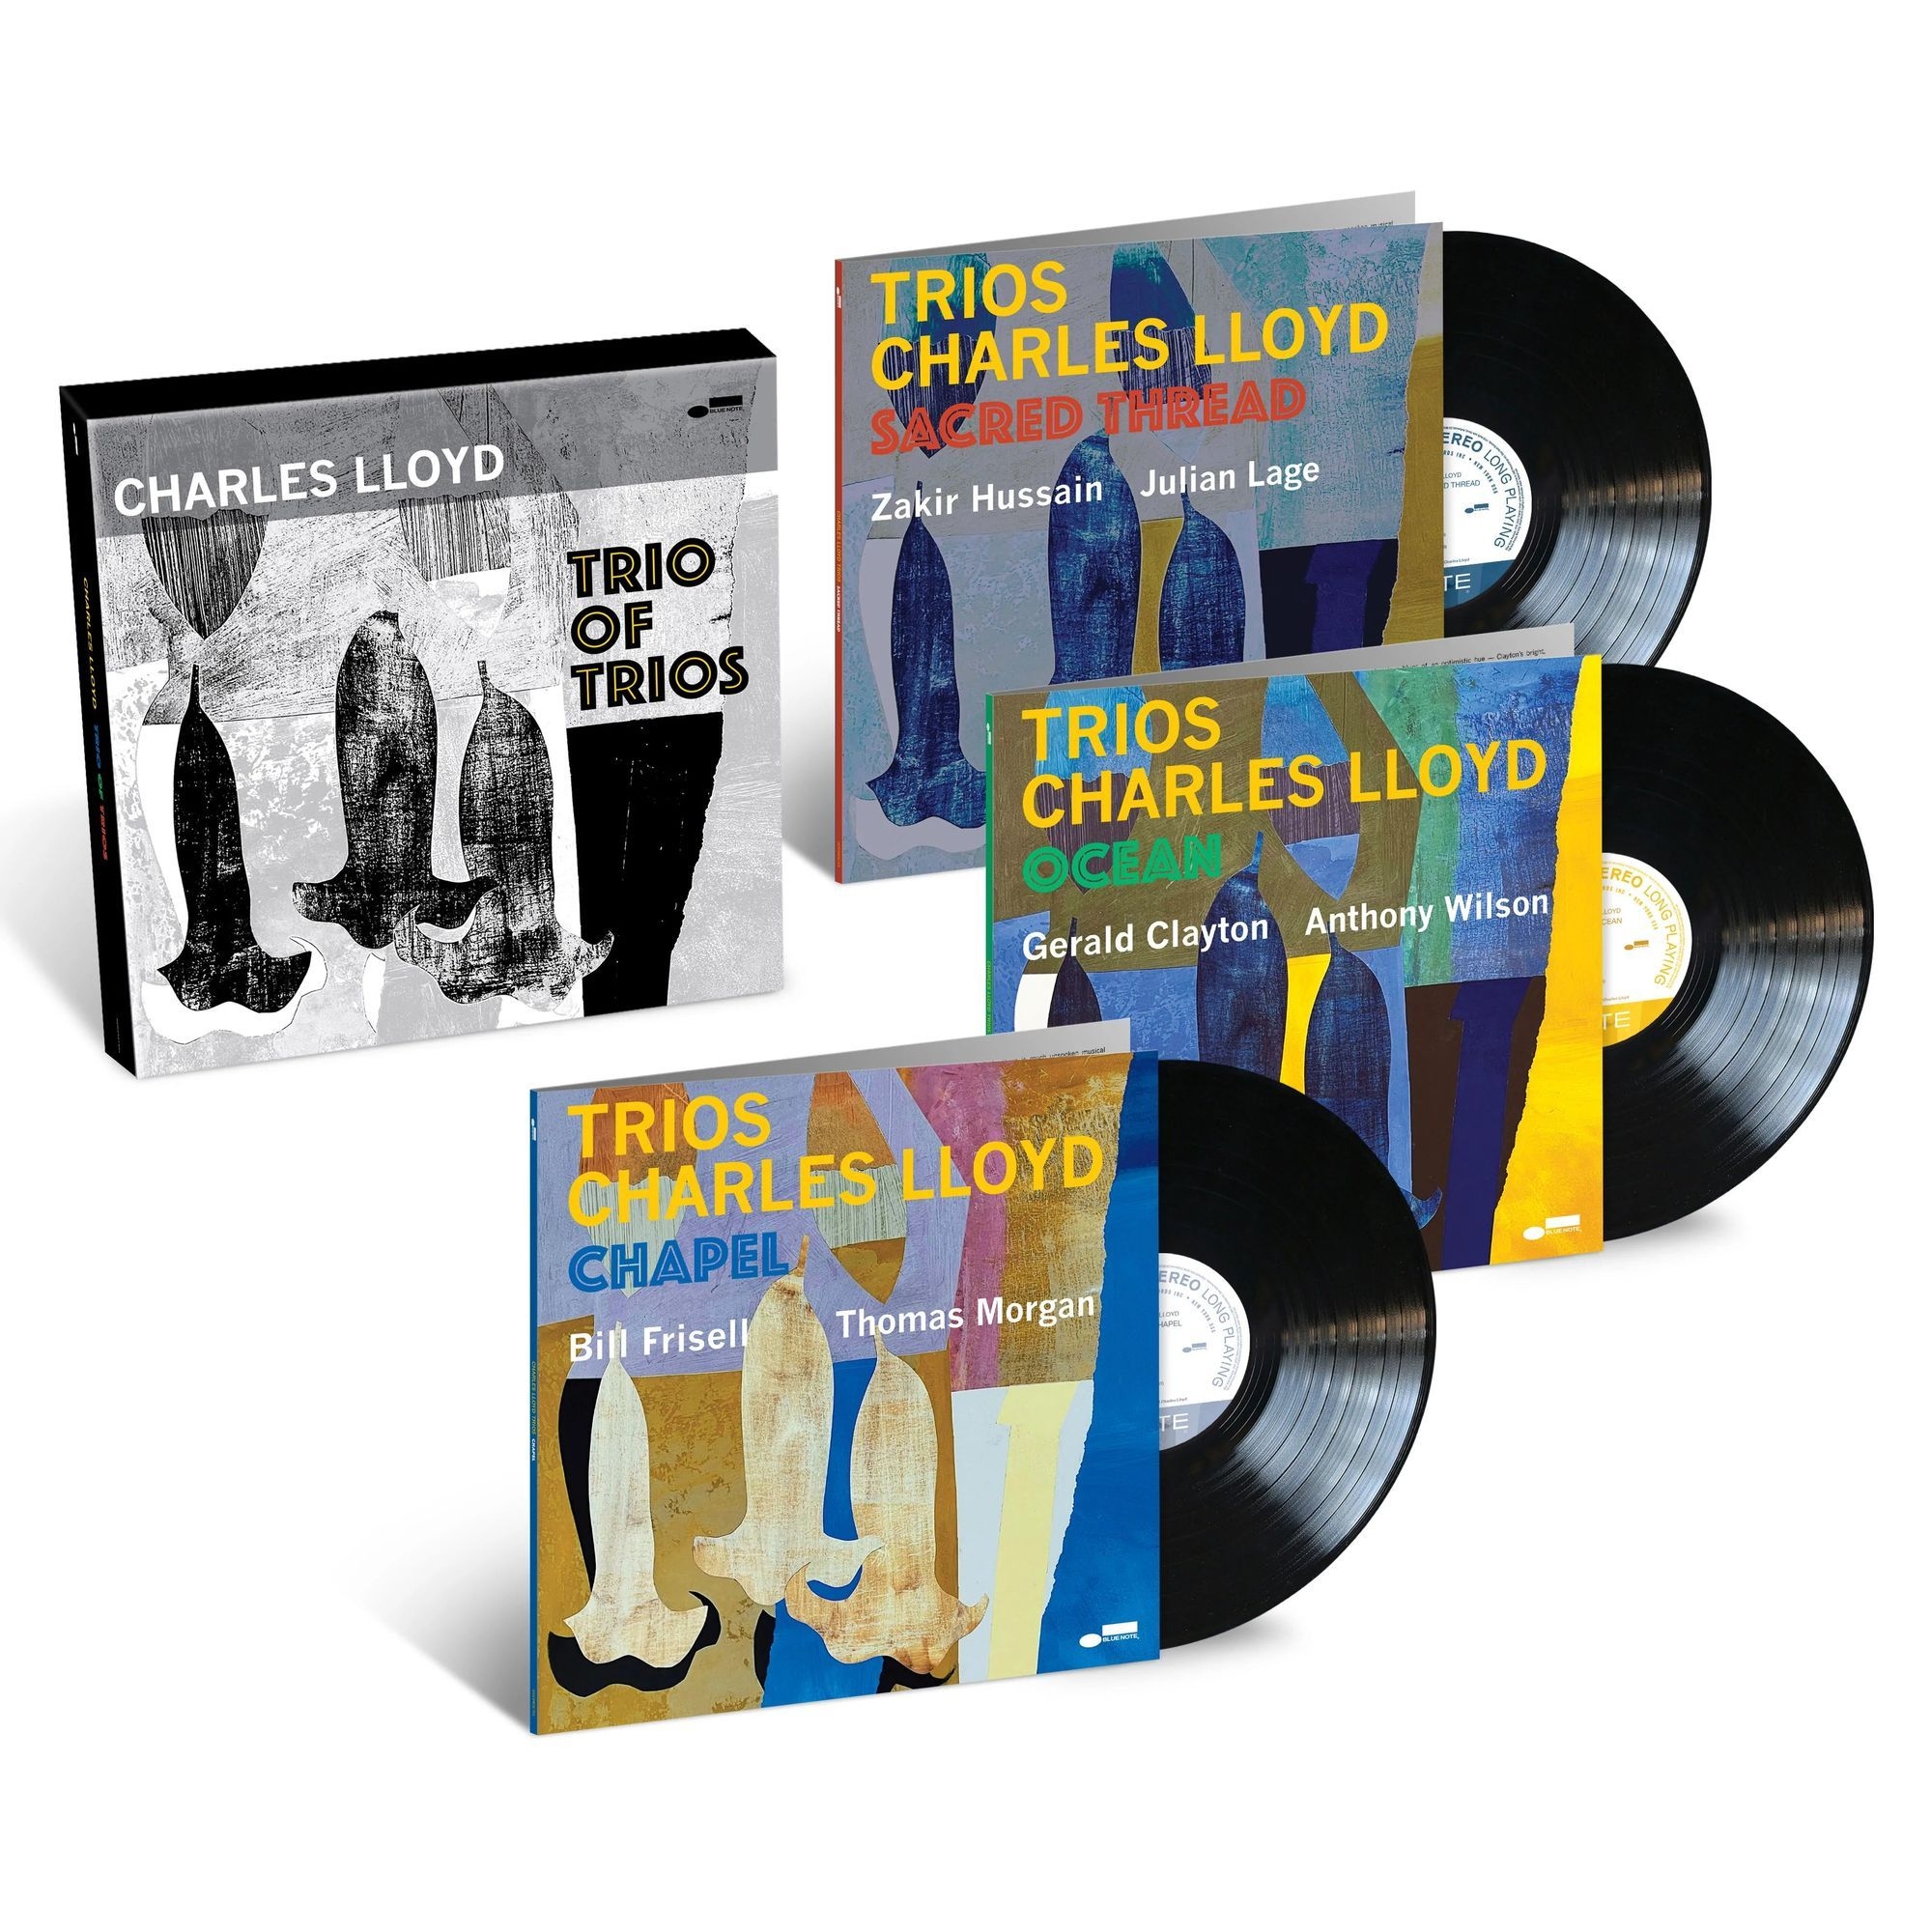 Виниловая пластинка Lloyd, Charles, Trio Of Trios (Box) (0602445545209) виниловая пластинка trios charles lloyd chapel